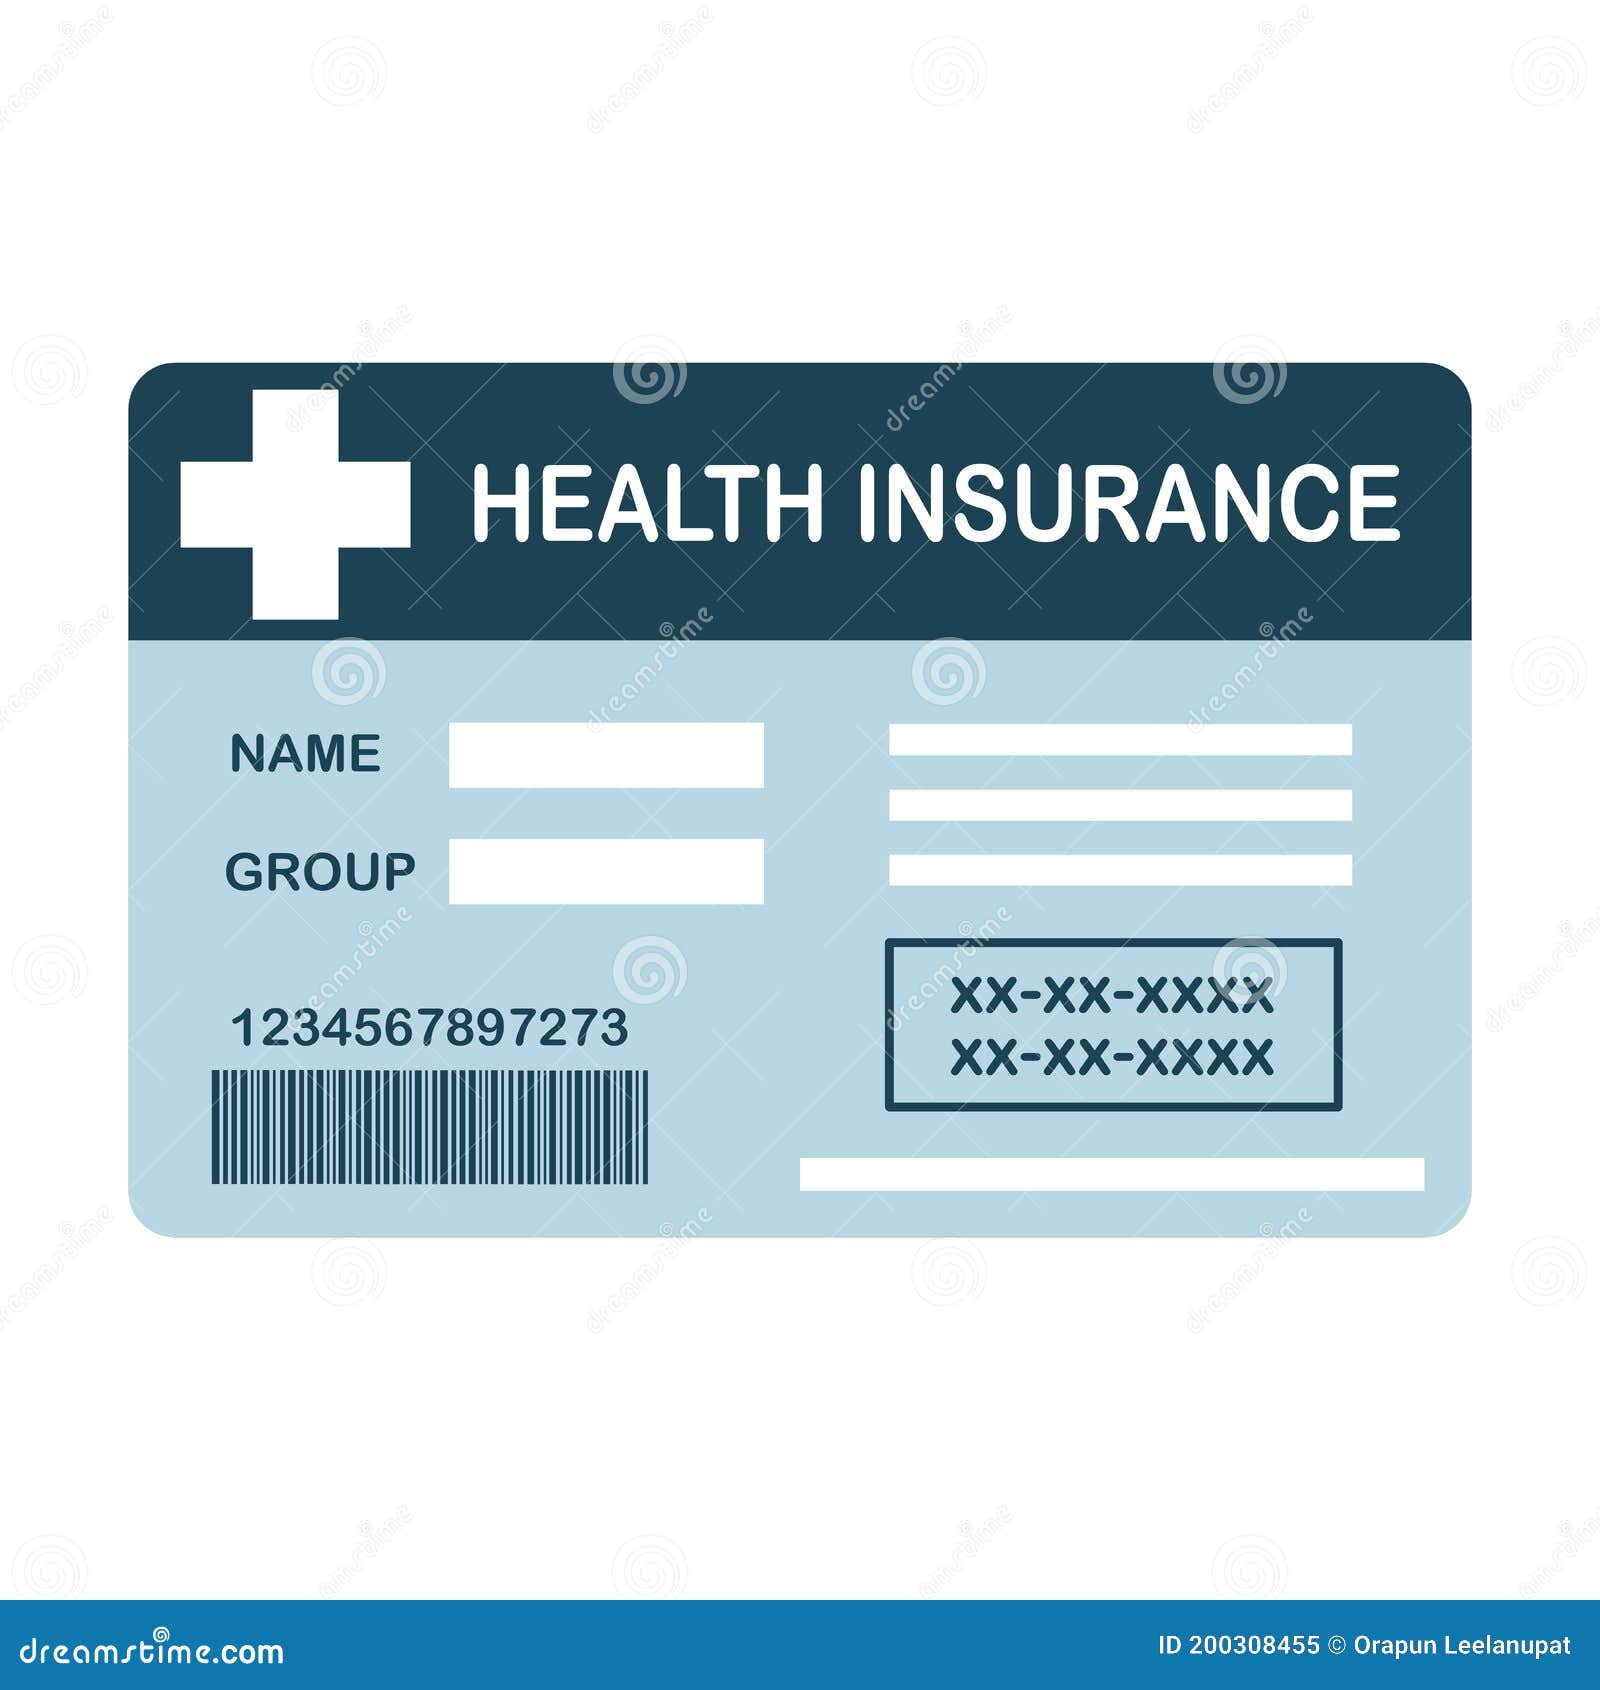 Health Insurance Card Flat Design On White Background Medical Insurance Card Concept Vector Illustration Stock Vector Illustration Of Information Business 200308455